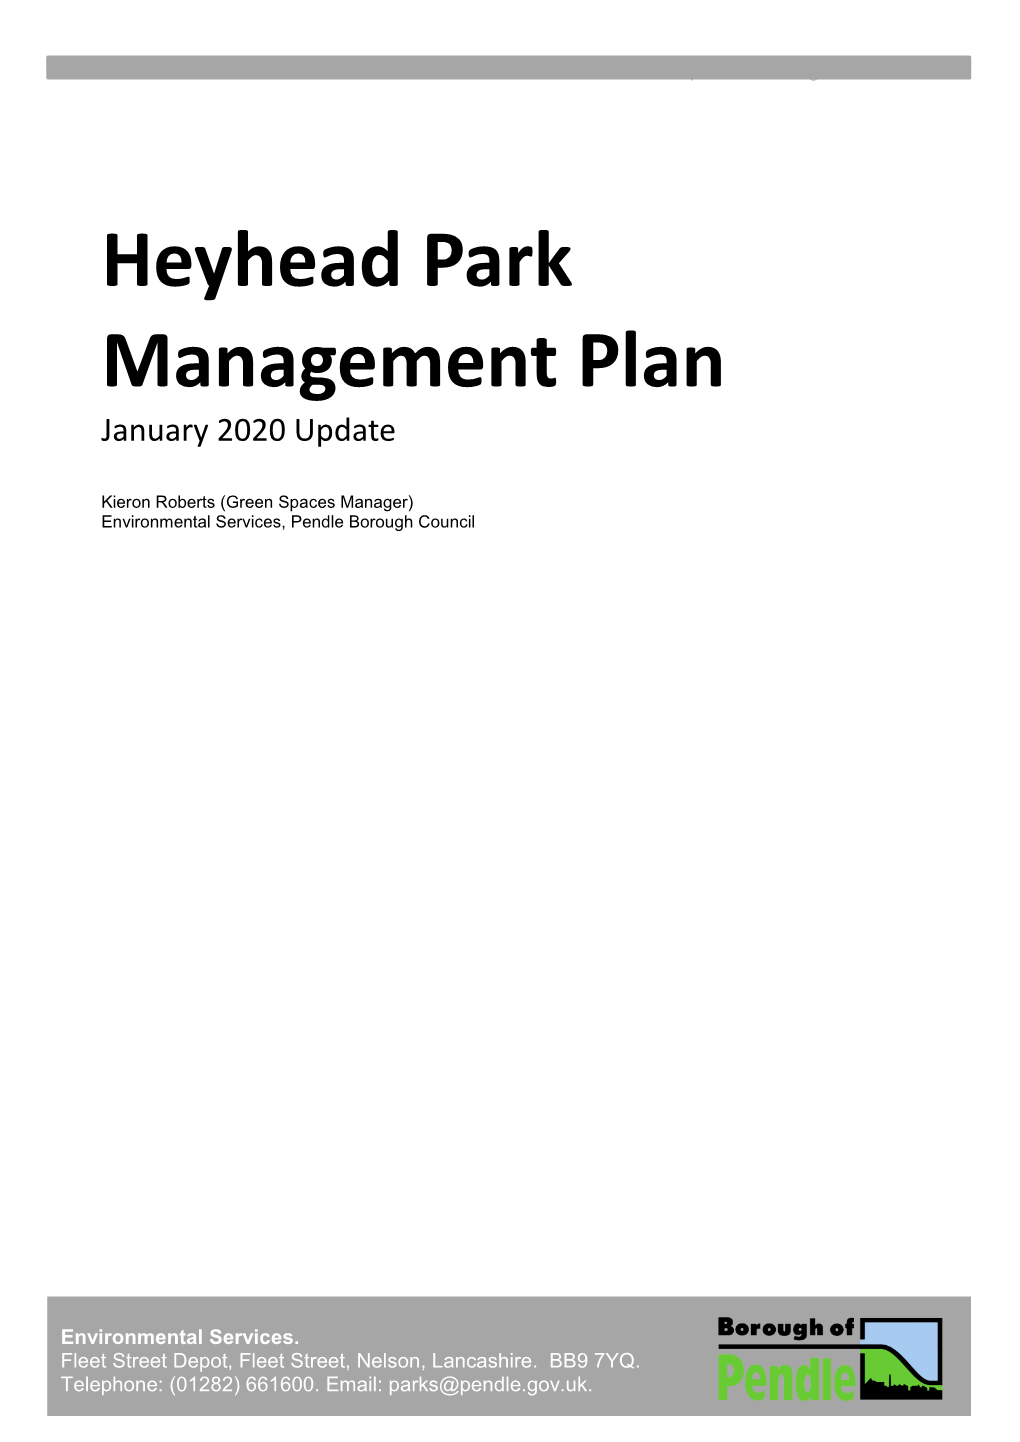 Heyhead Park Management Plan